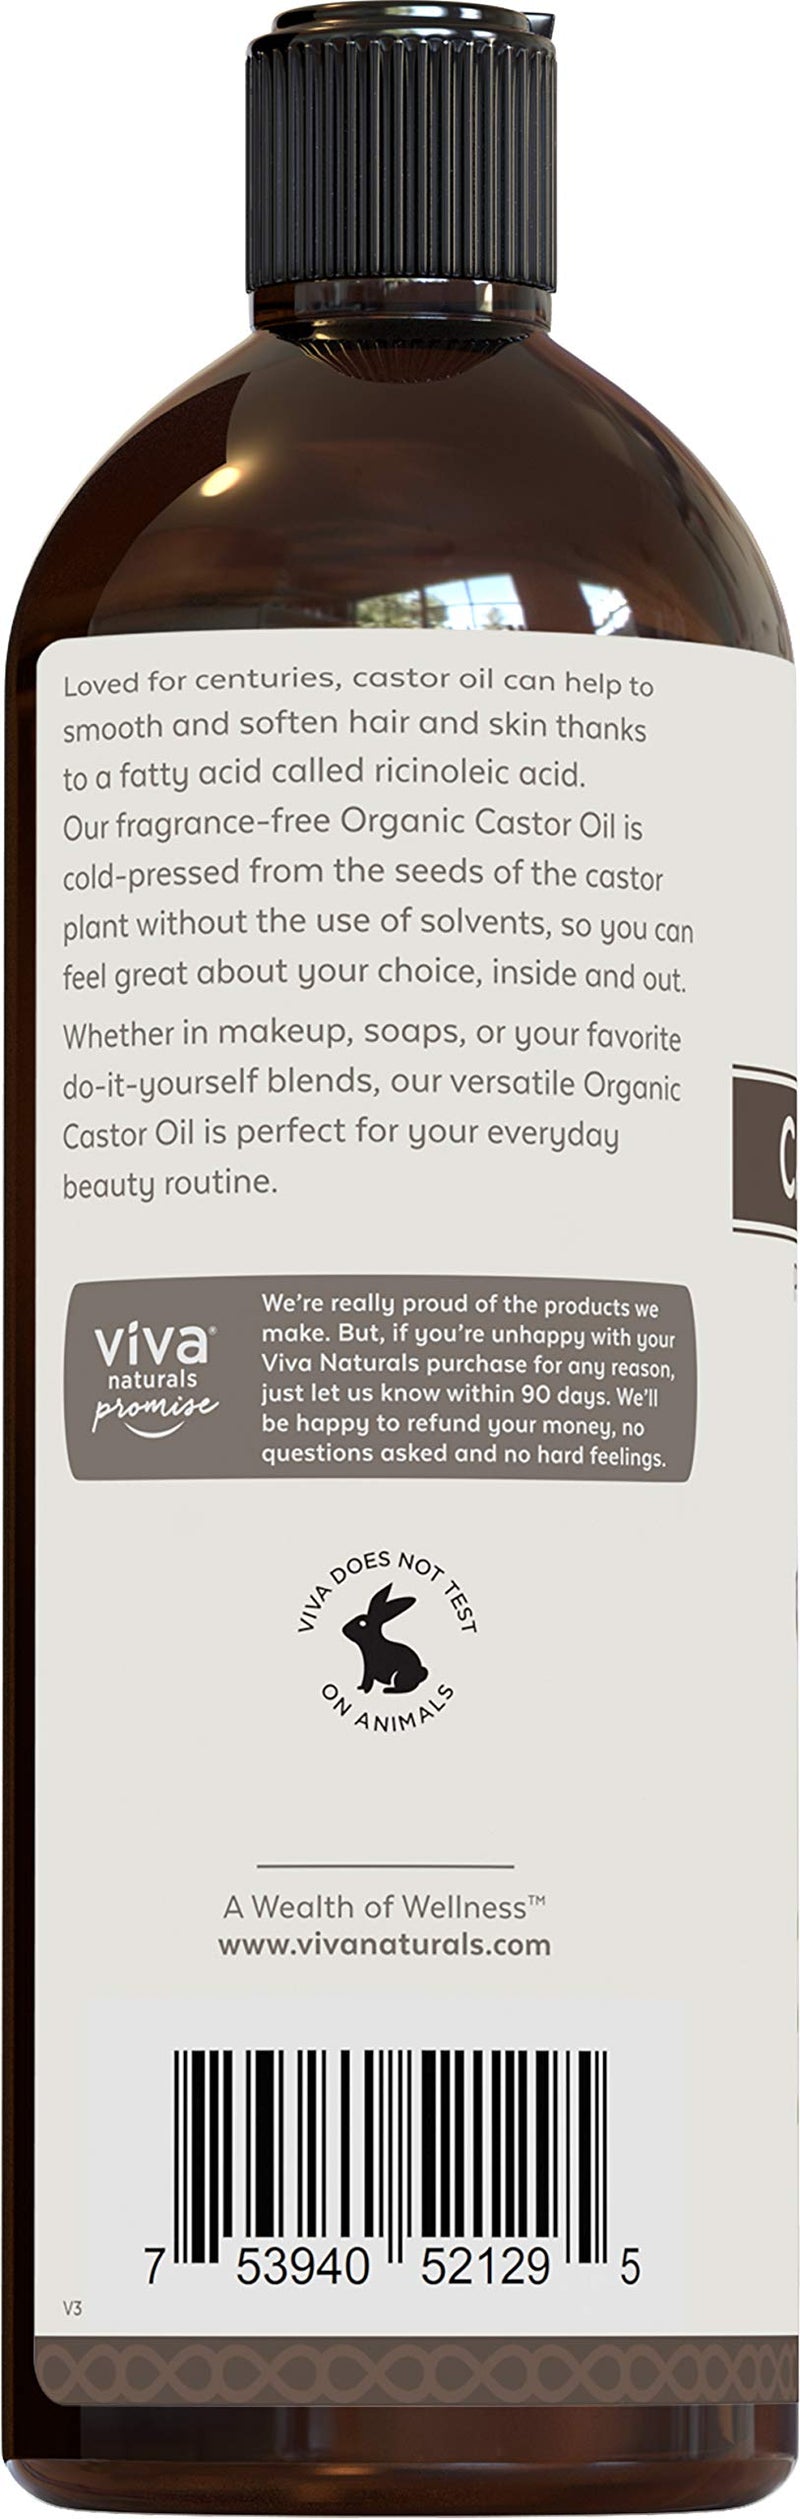 [Australia] - Organic Castor Oil for Eyelashes and Eyebrows (16 fl oz) - USDA Certified Organic, Cold Pressed Castor Oil, Natural Hair Oil & Eyelash Serum, Beauty Kit Included 